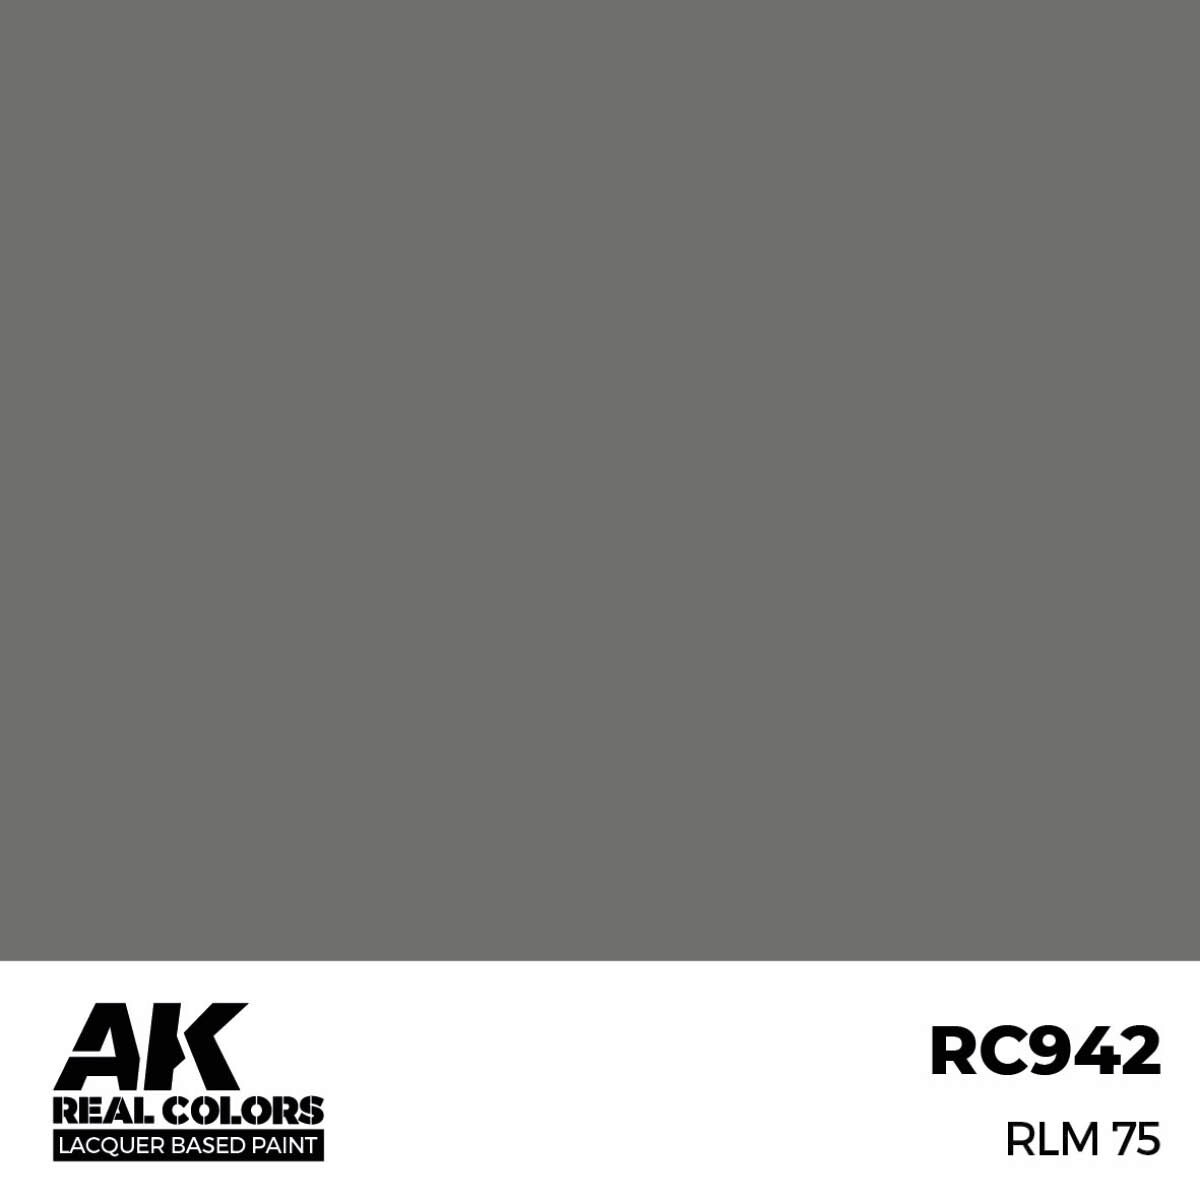 AK RC942 Real Colors RLM 75 17 ml.